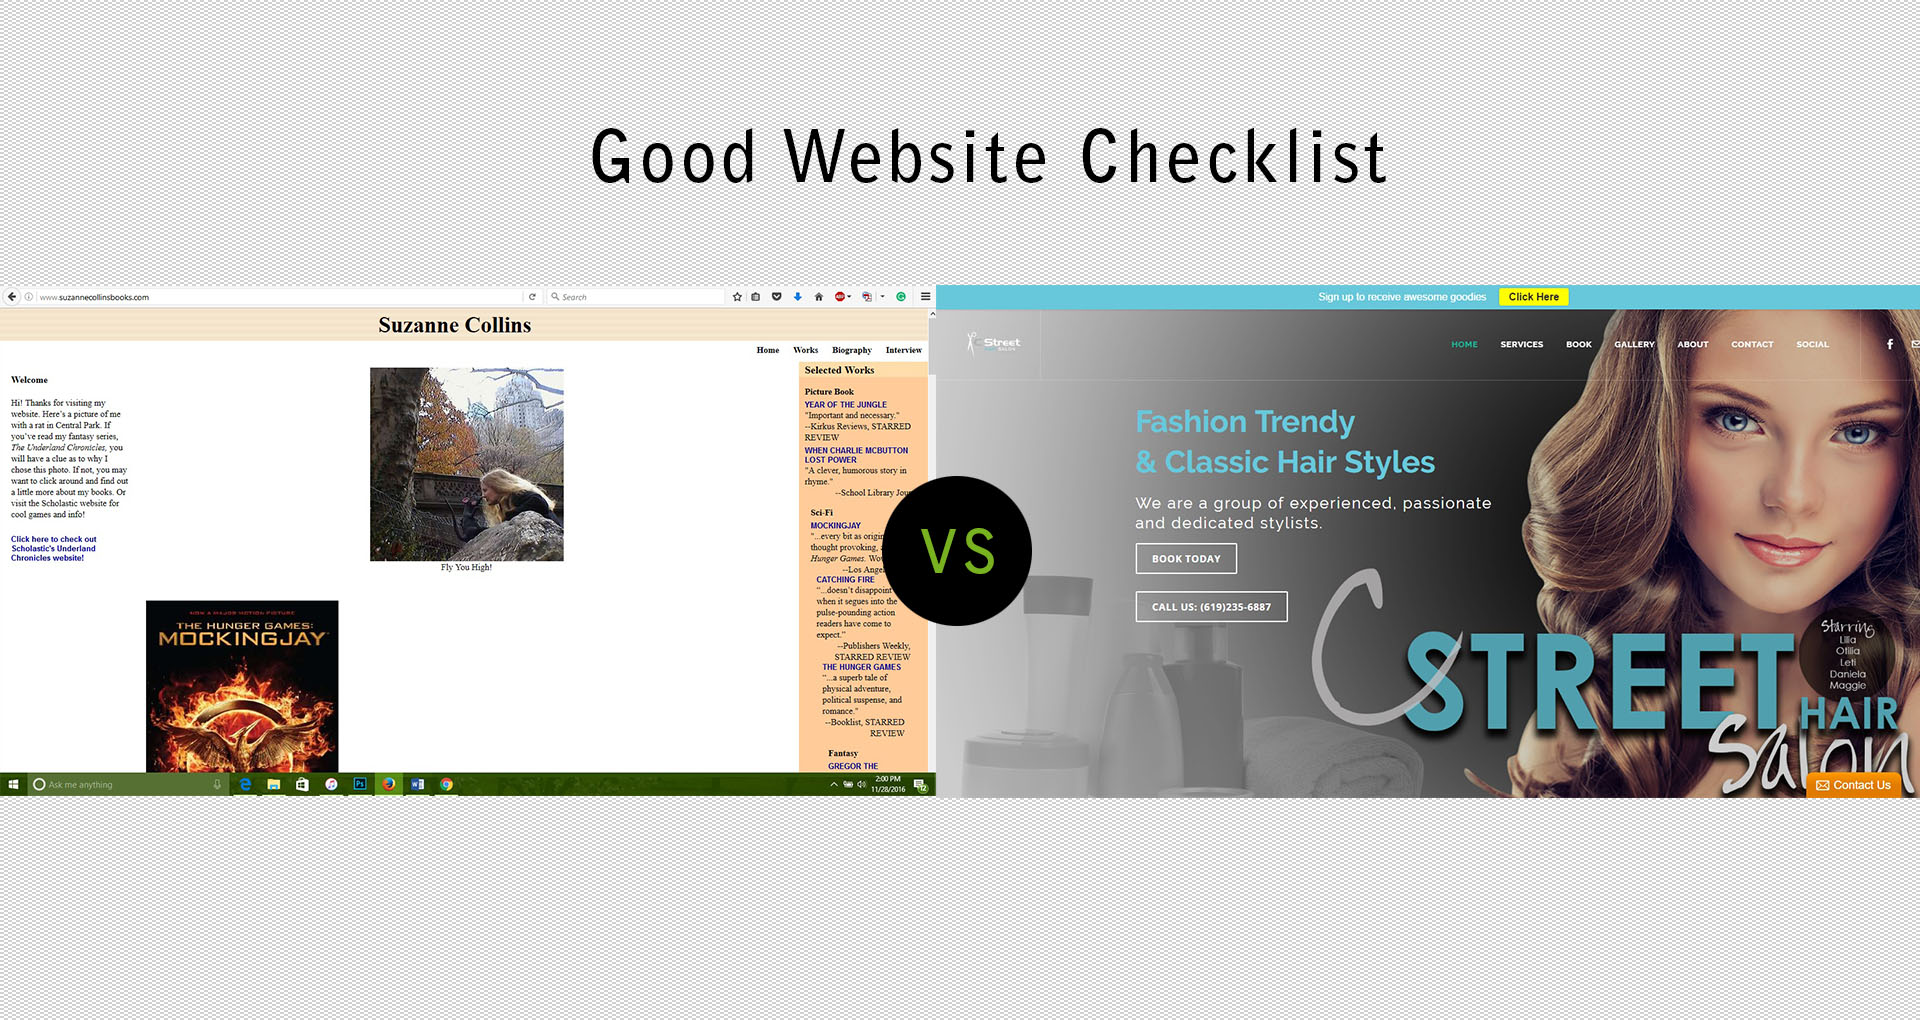 Bad vs Good website design